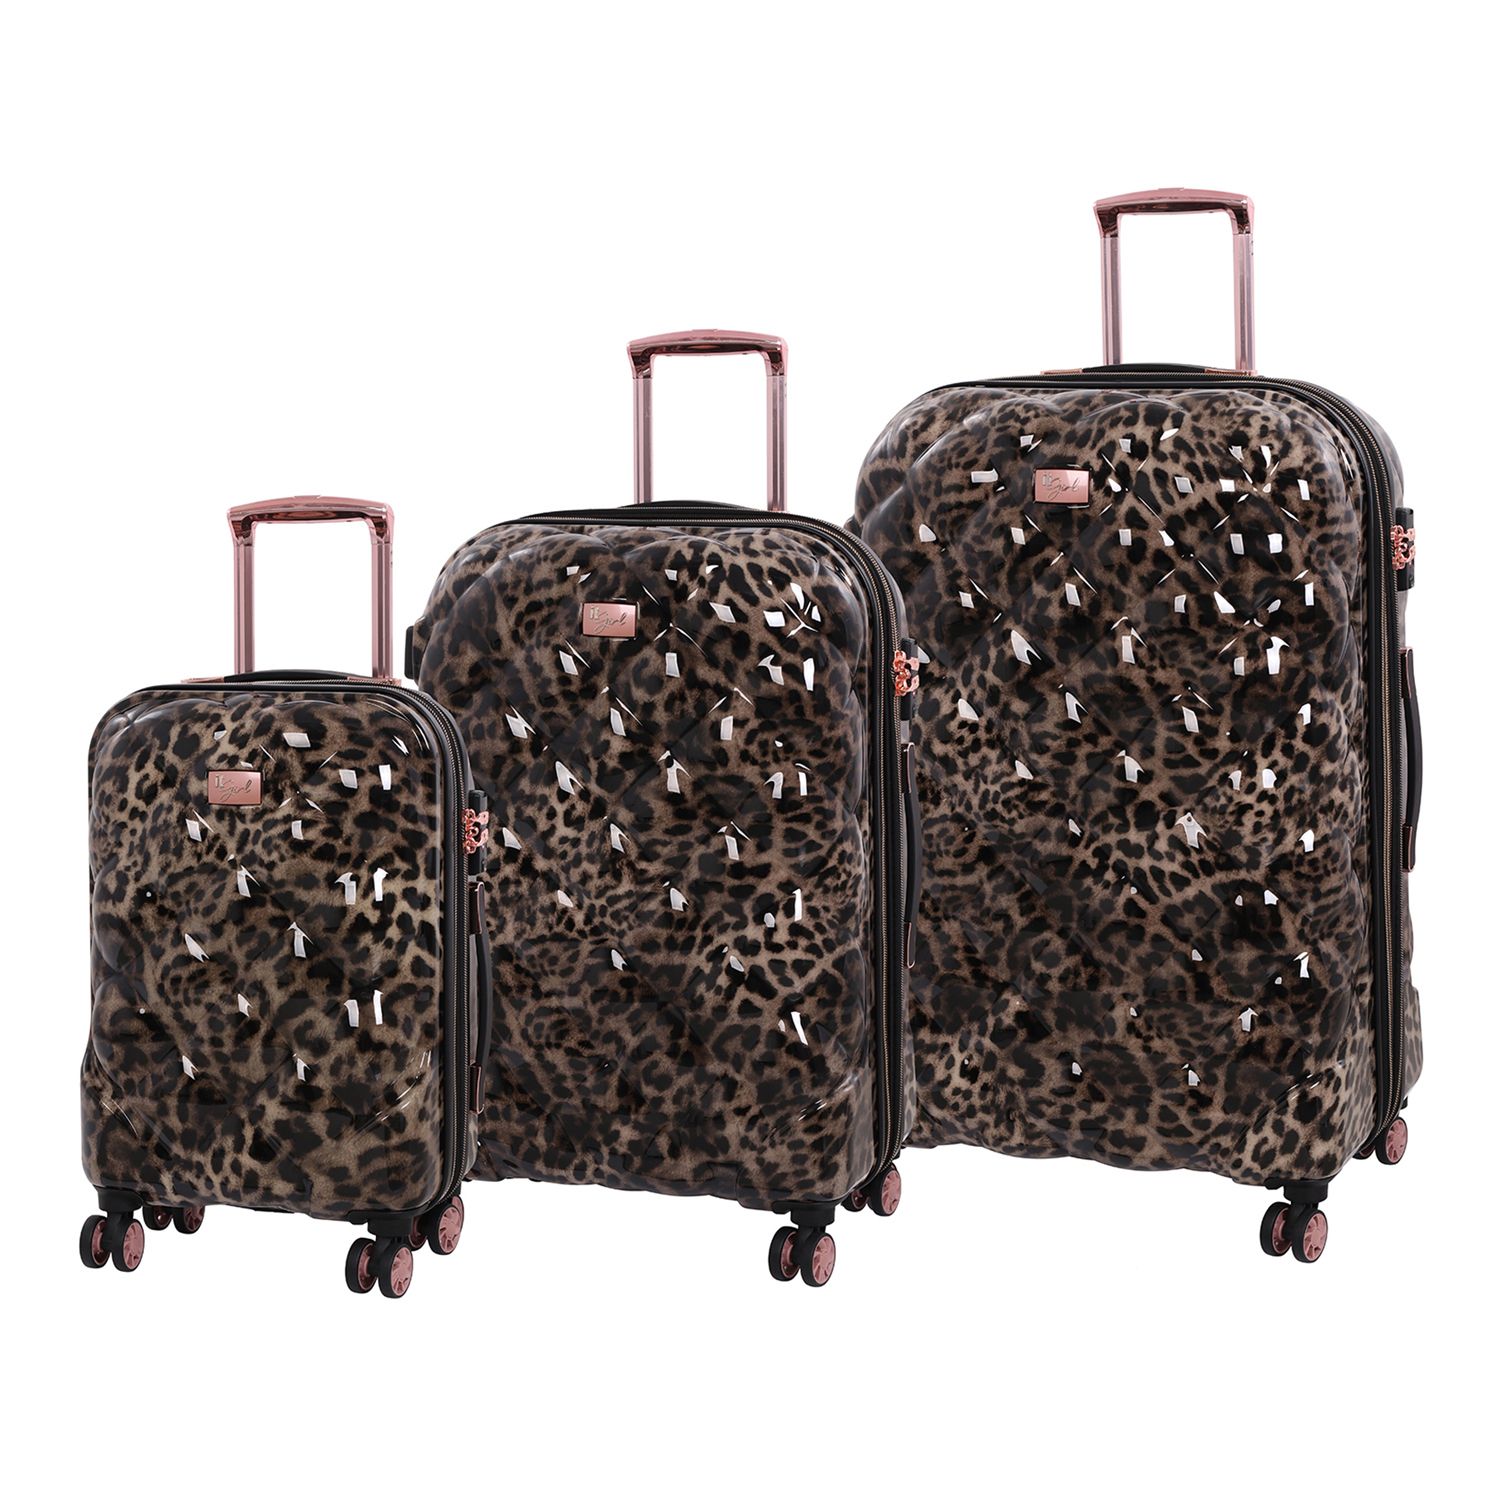 leopard luggage set